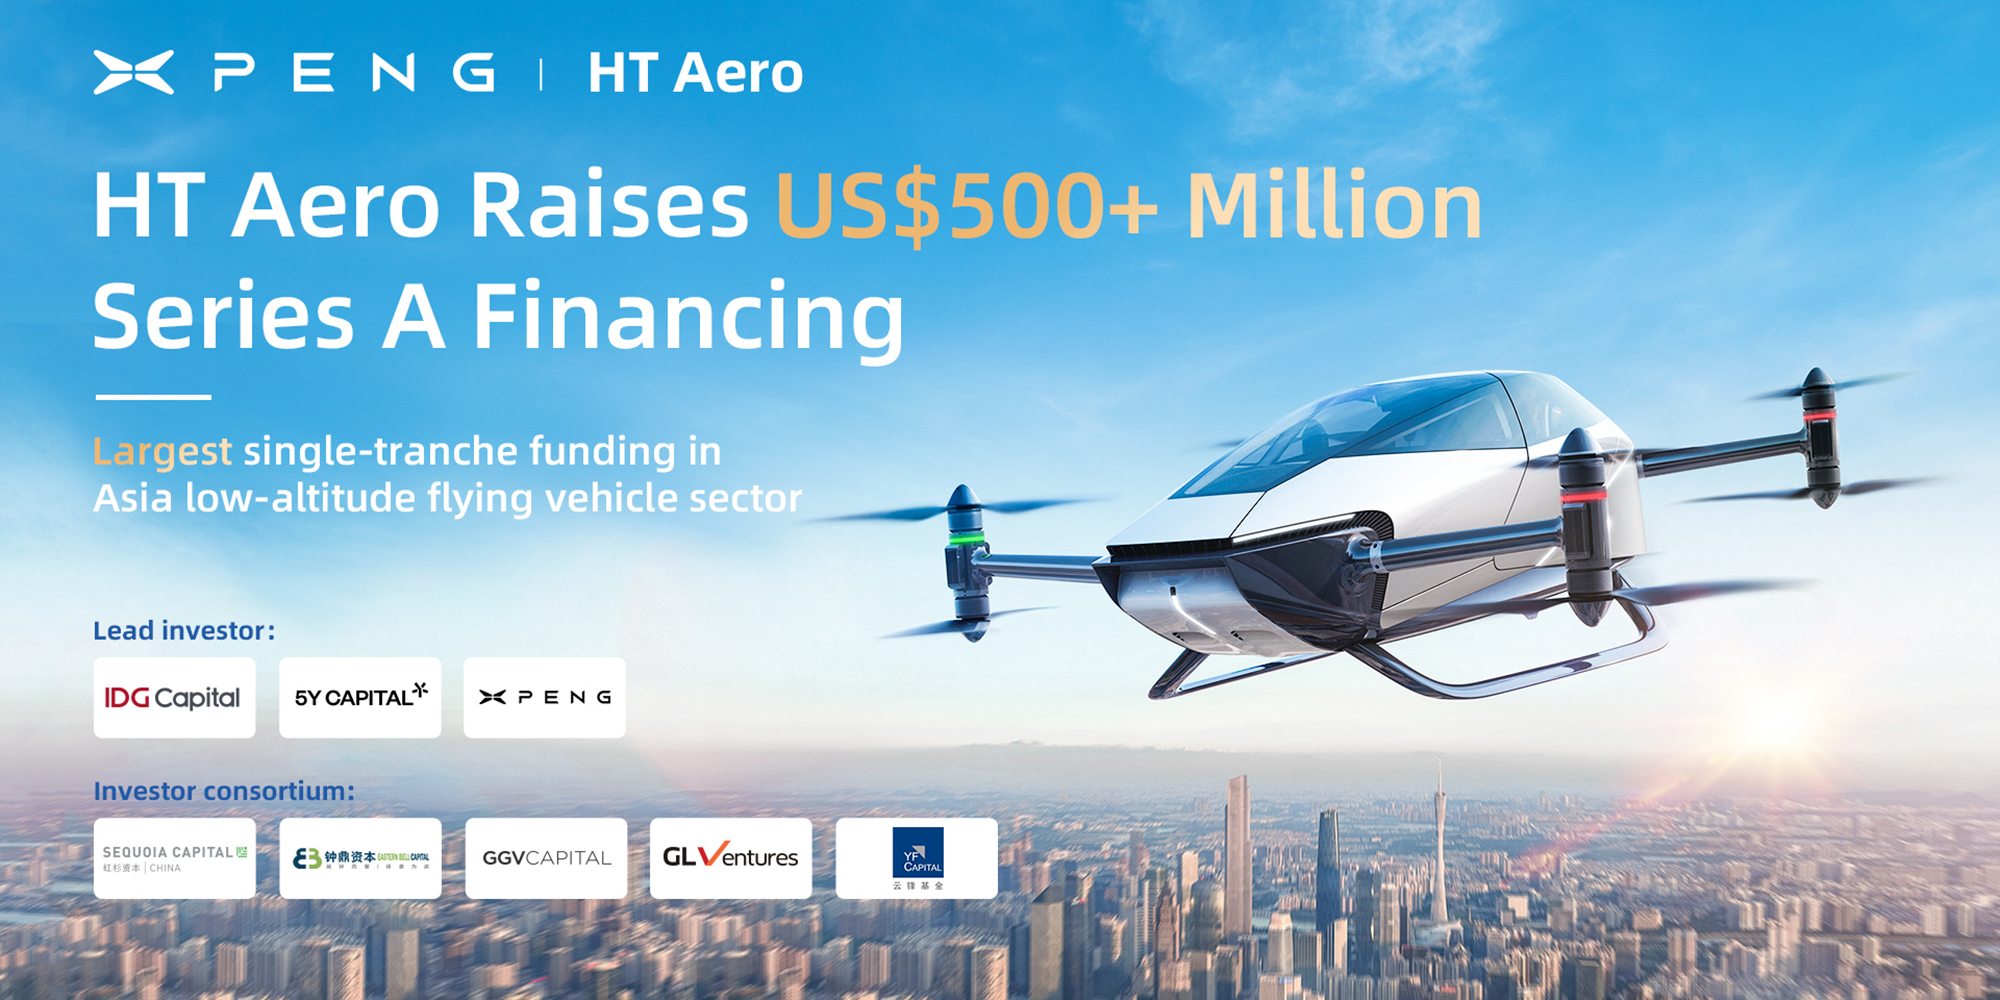 XPeng HT Aero Funding